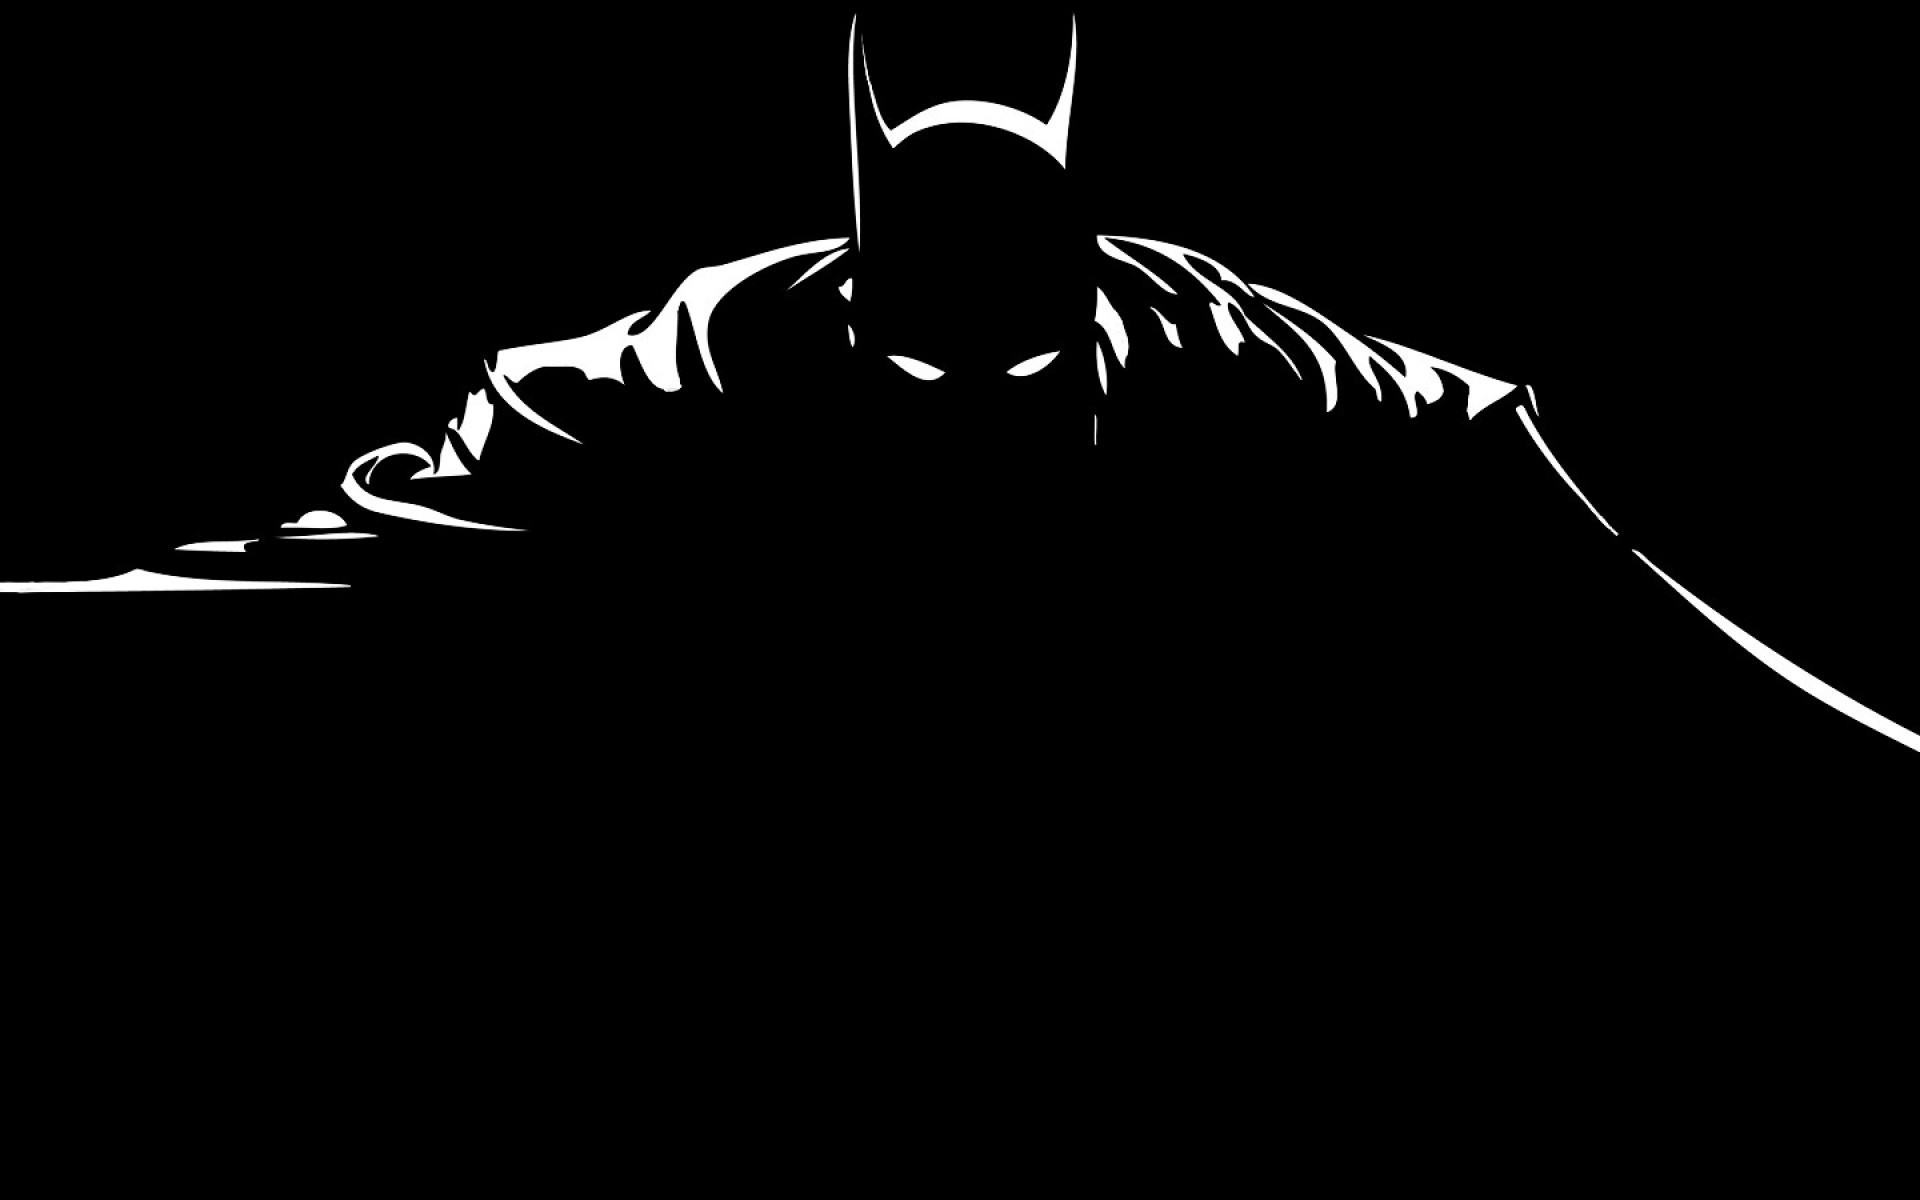 General 1920x1200 DC Comics Batman dark monochrome hero minimalism simple background black background